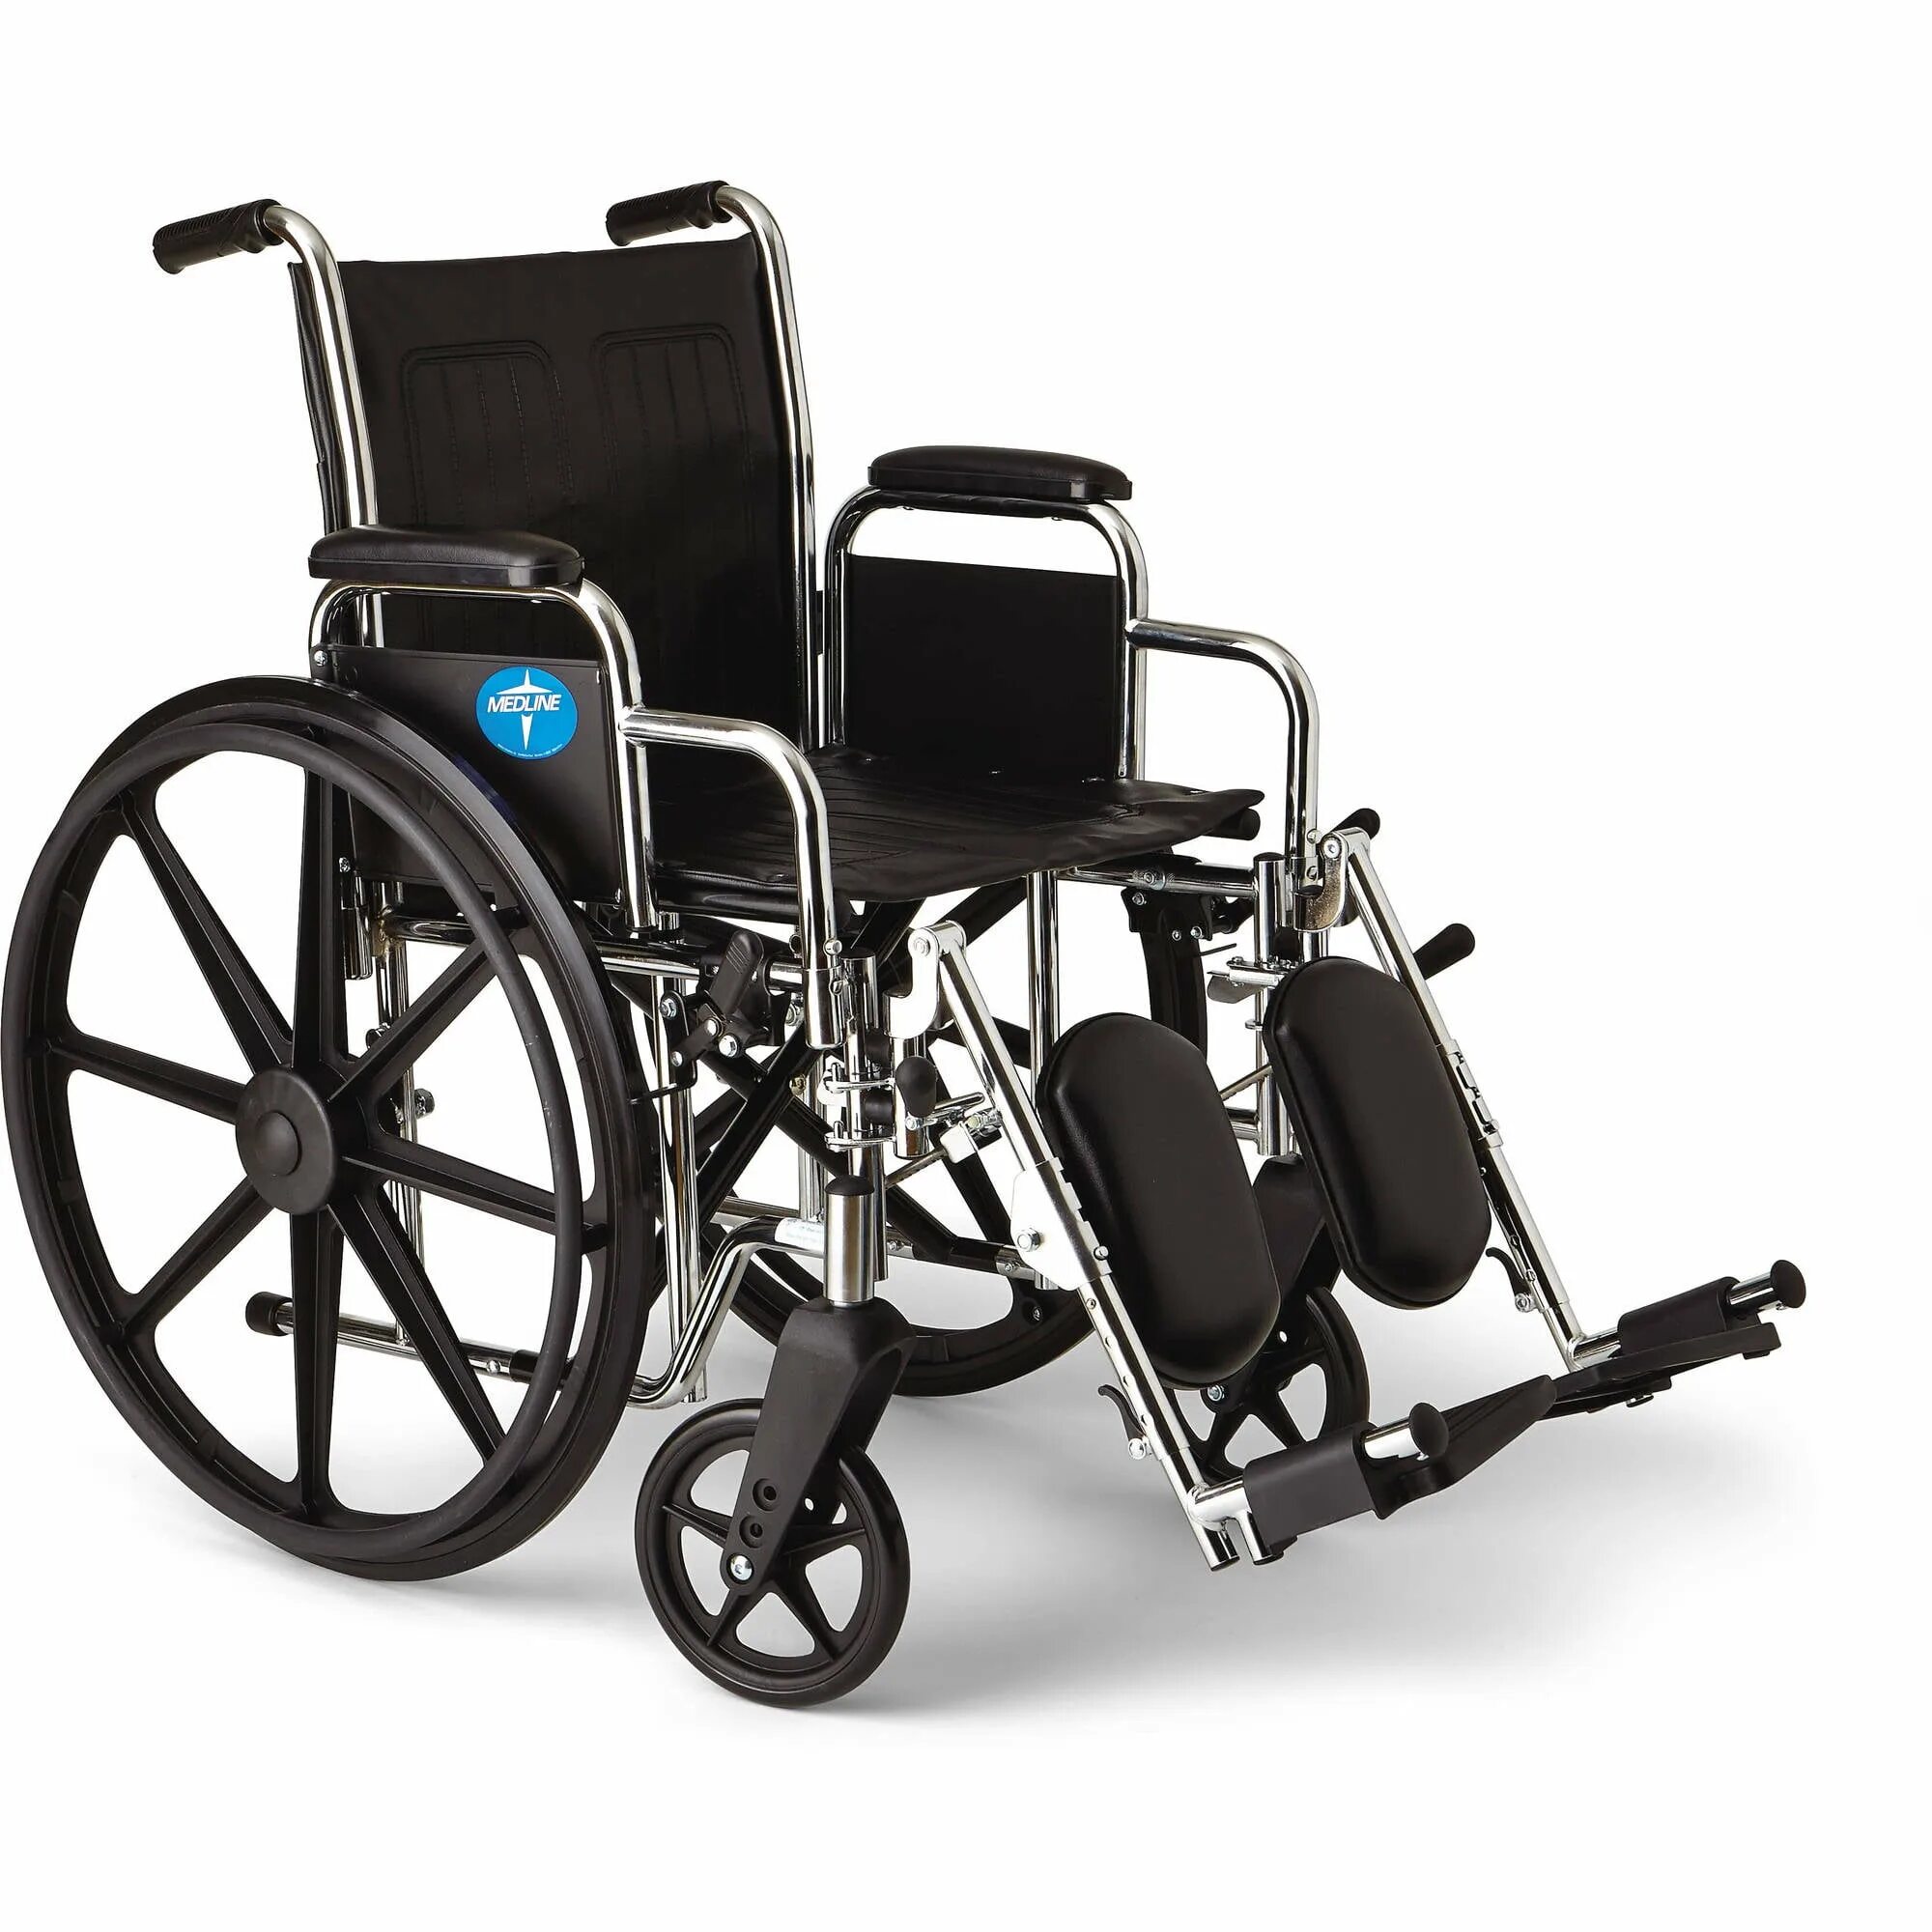 Коляска инвалидная Армед 2000. Инвалидная коляска Армед 4000 1. Кресло-коляска Армед fs951b. Кресло-коляска для инвалидов fs212bceg. Купить коляску армед